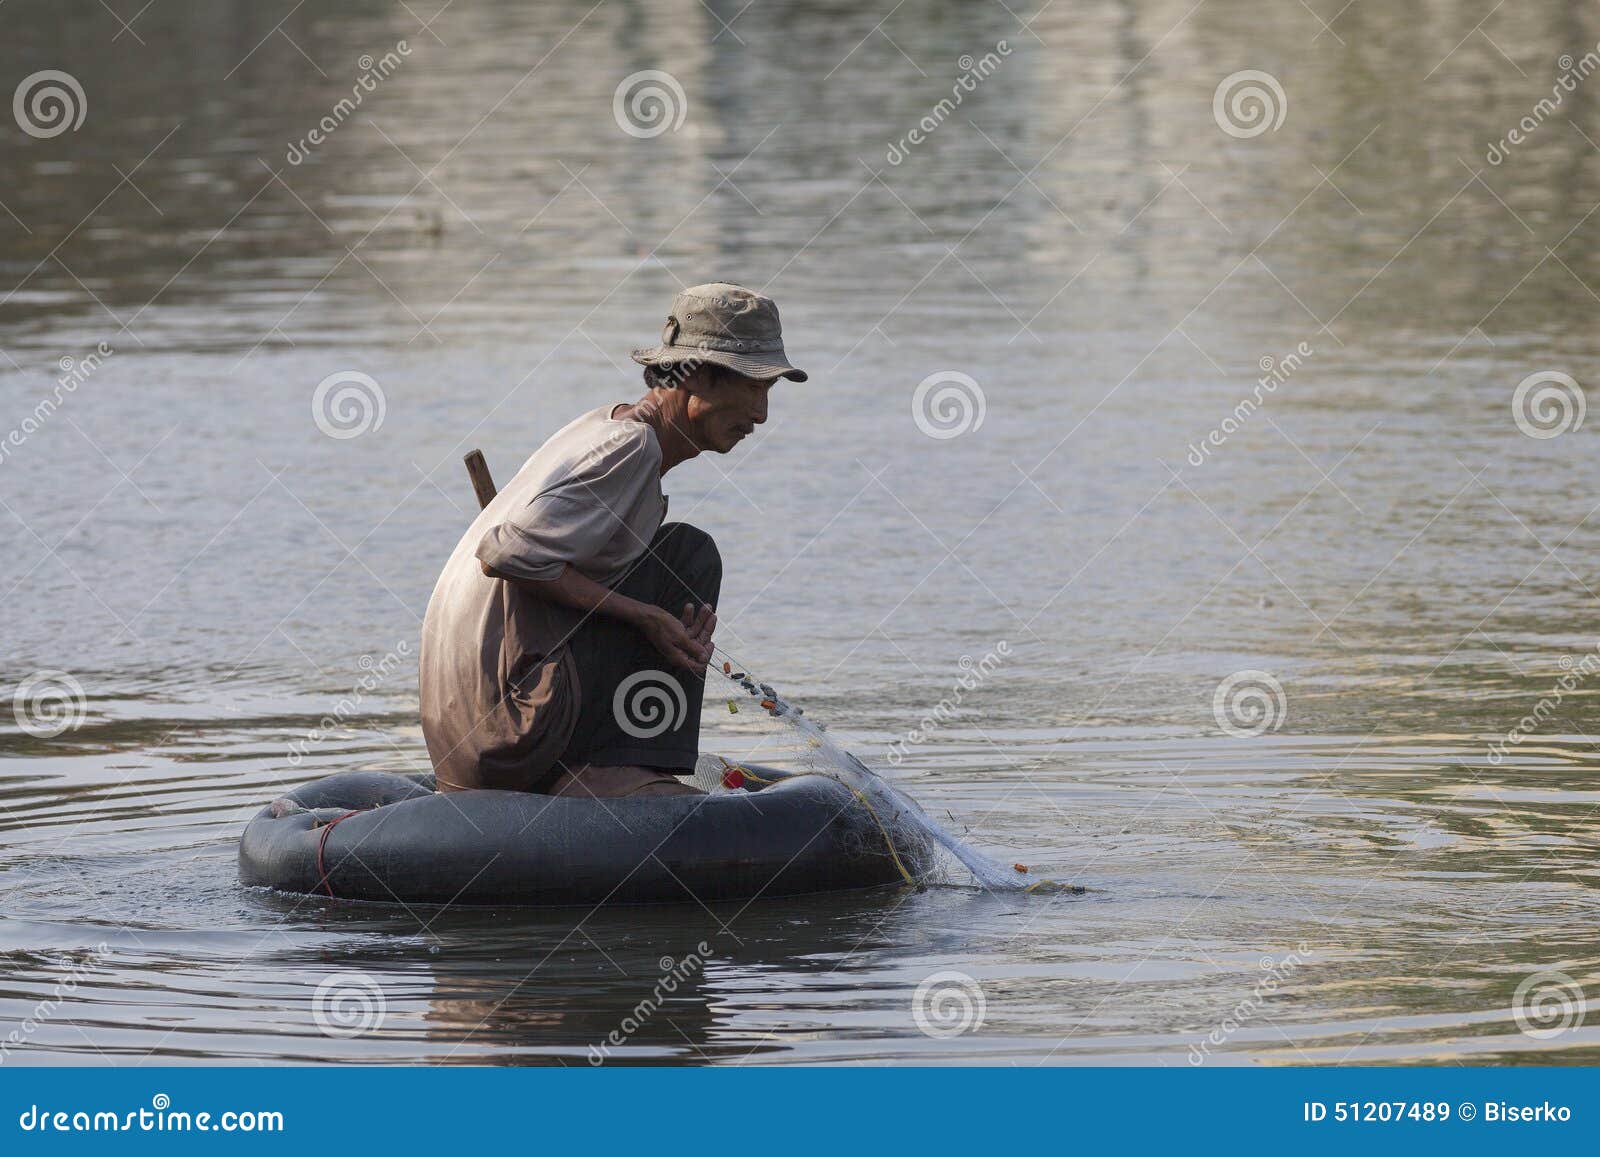 Poor man at Saigon river editorial stock image. Image of ...